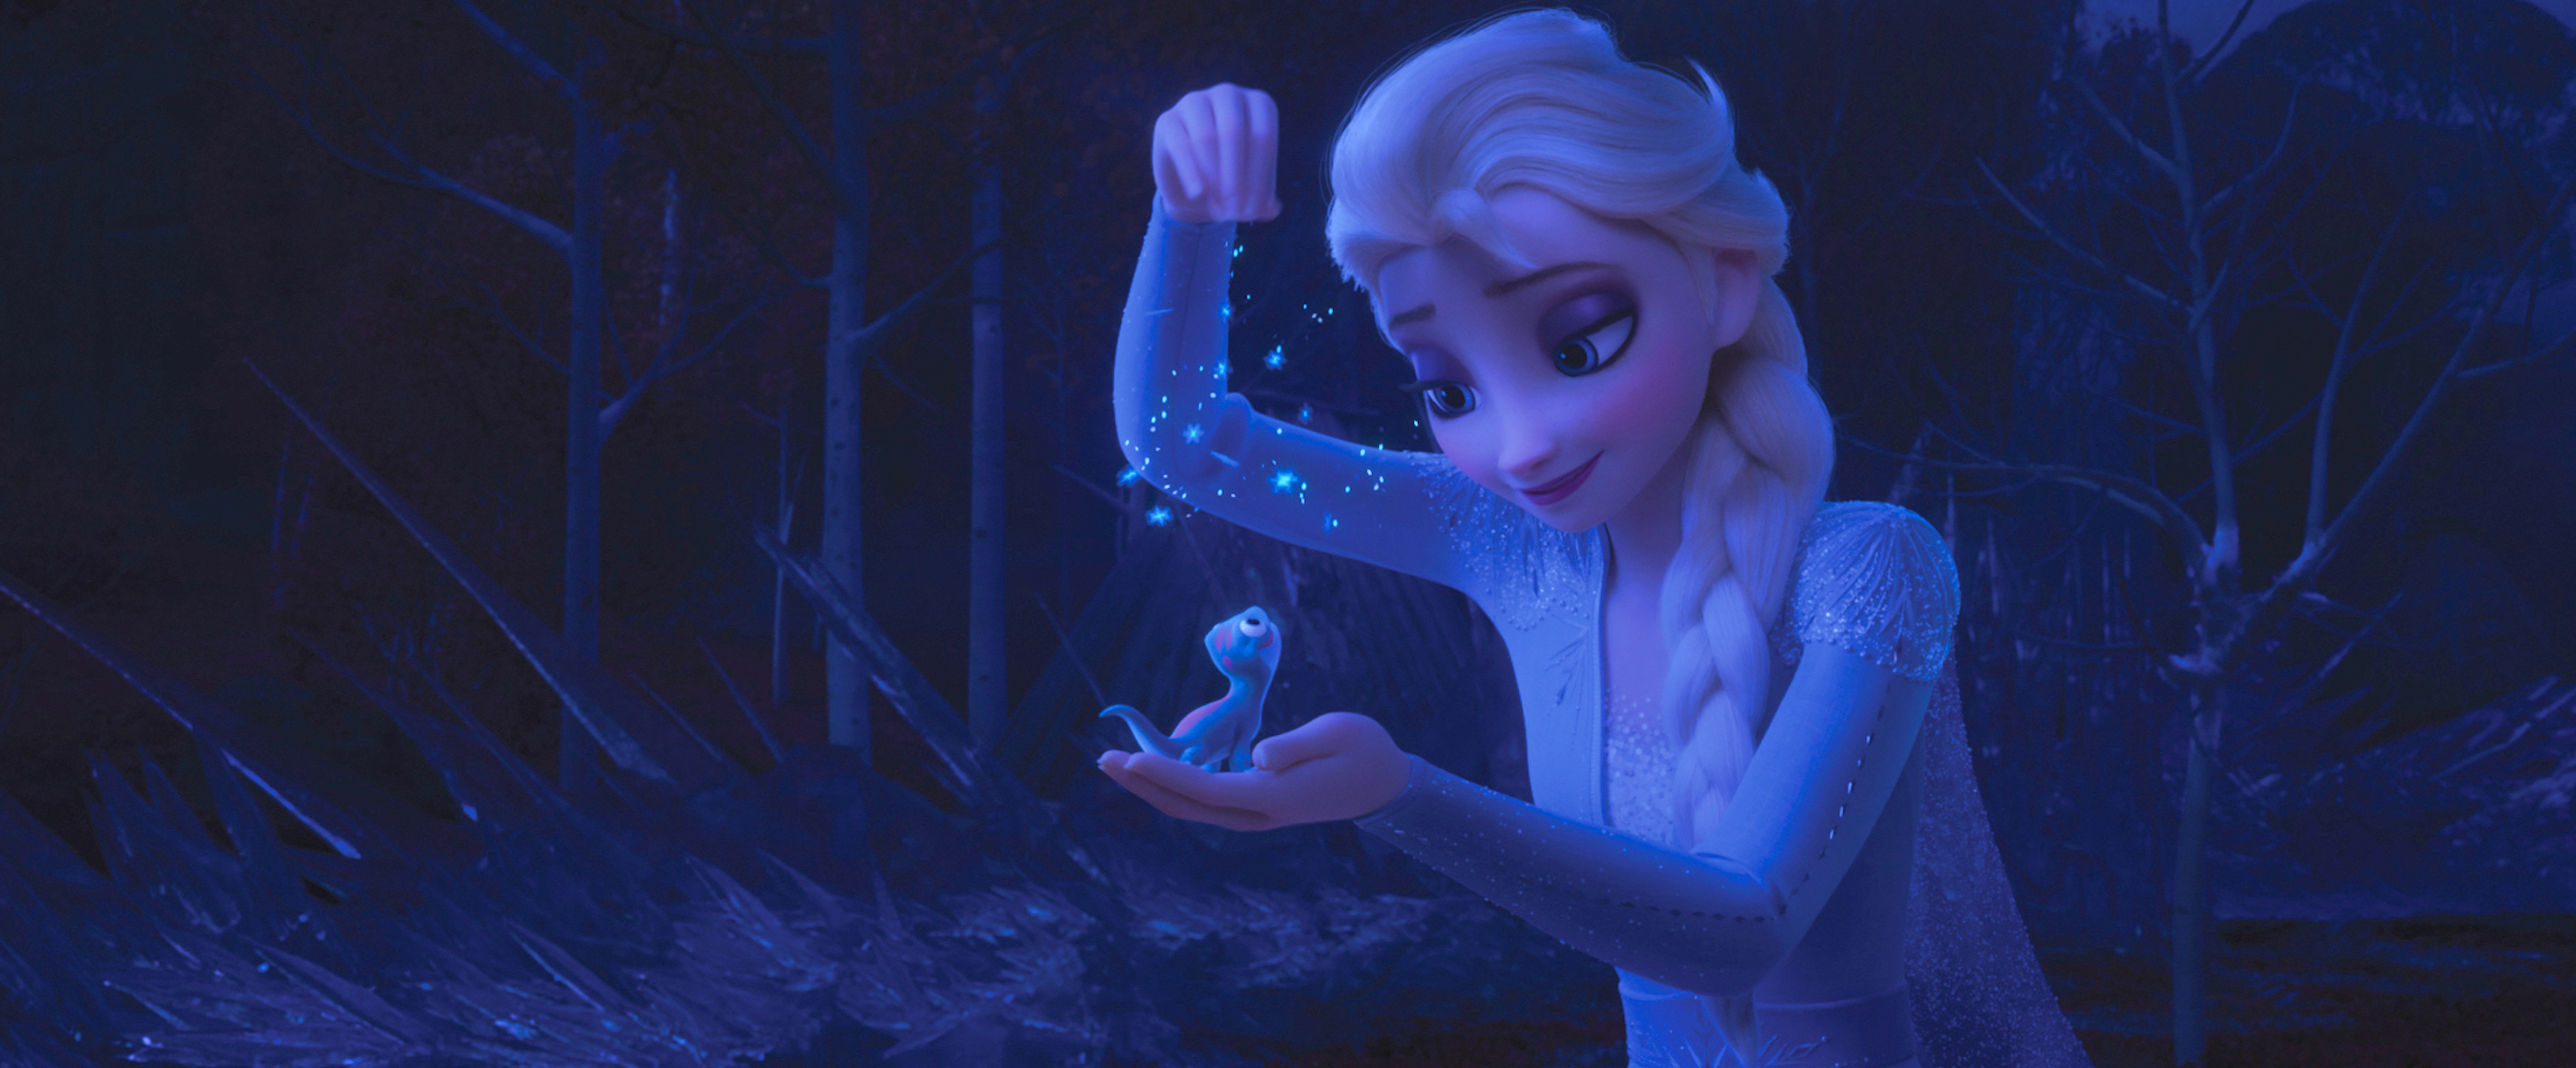 Frozen 2: Elsa 